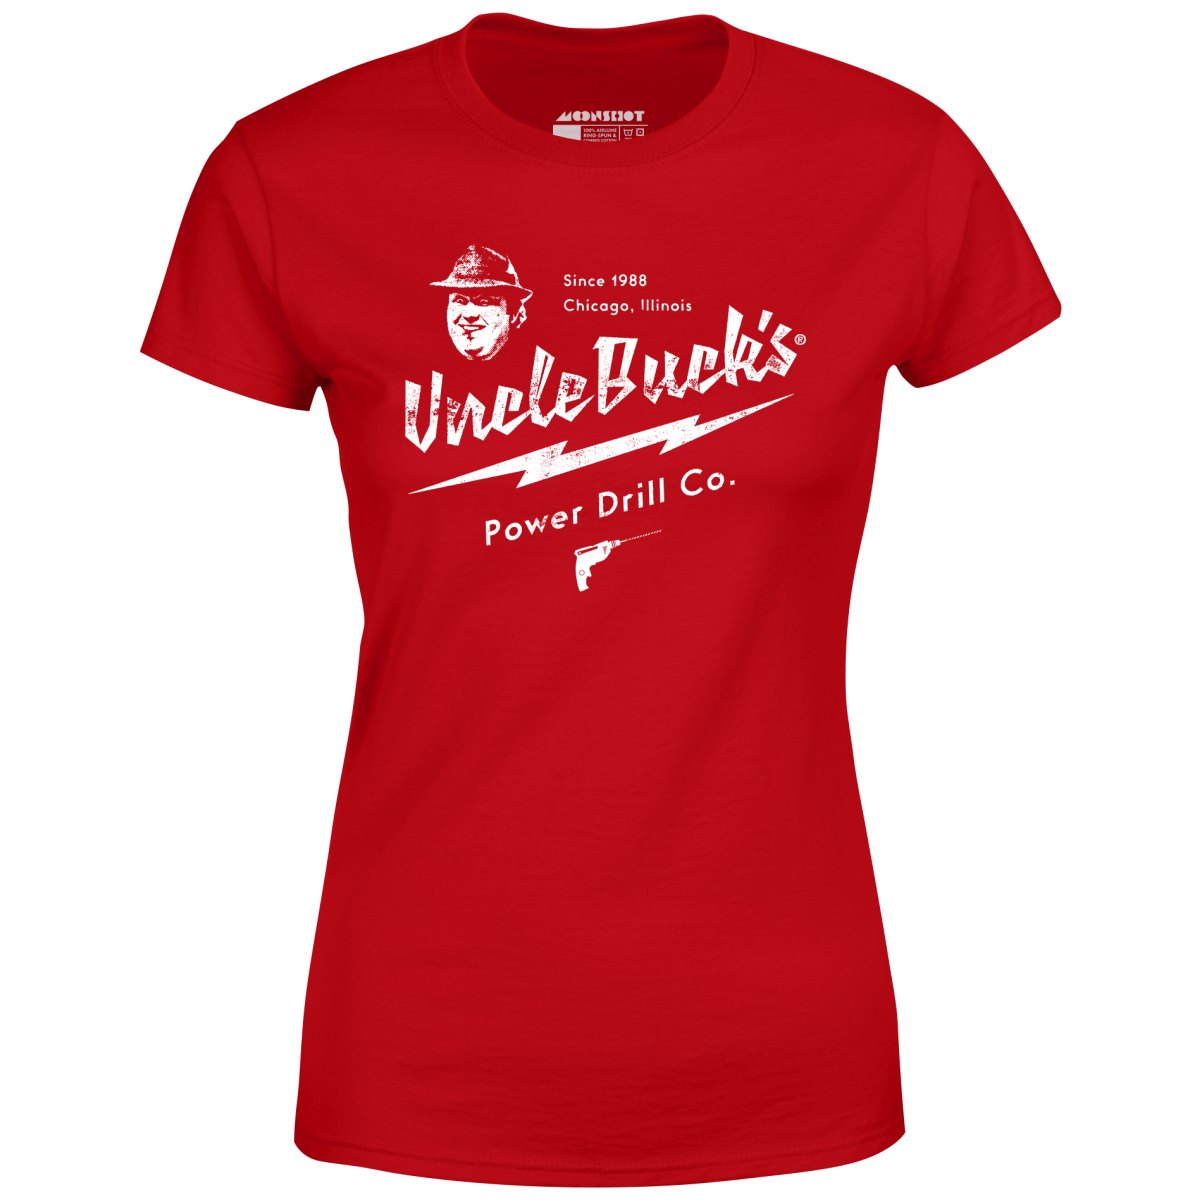 Uncle Buck's Power Drill Co. - Women's T-Shirt